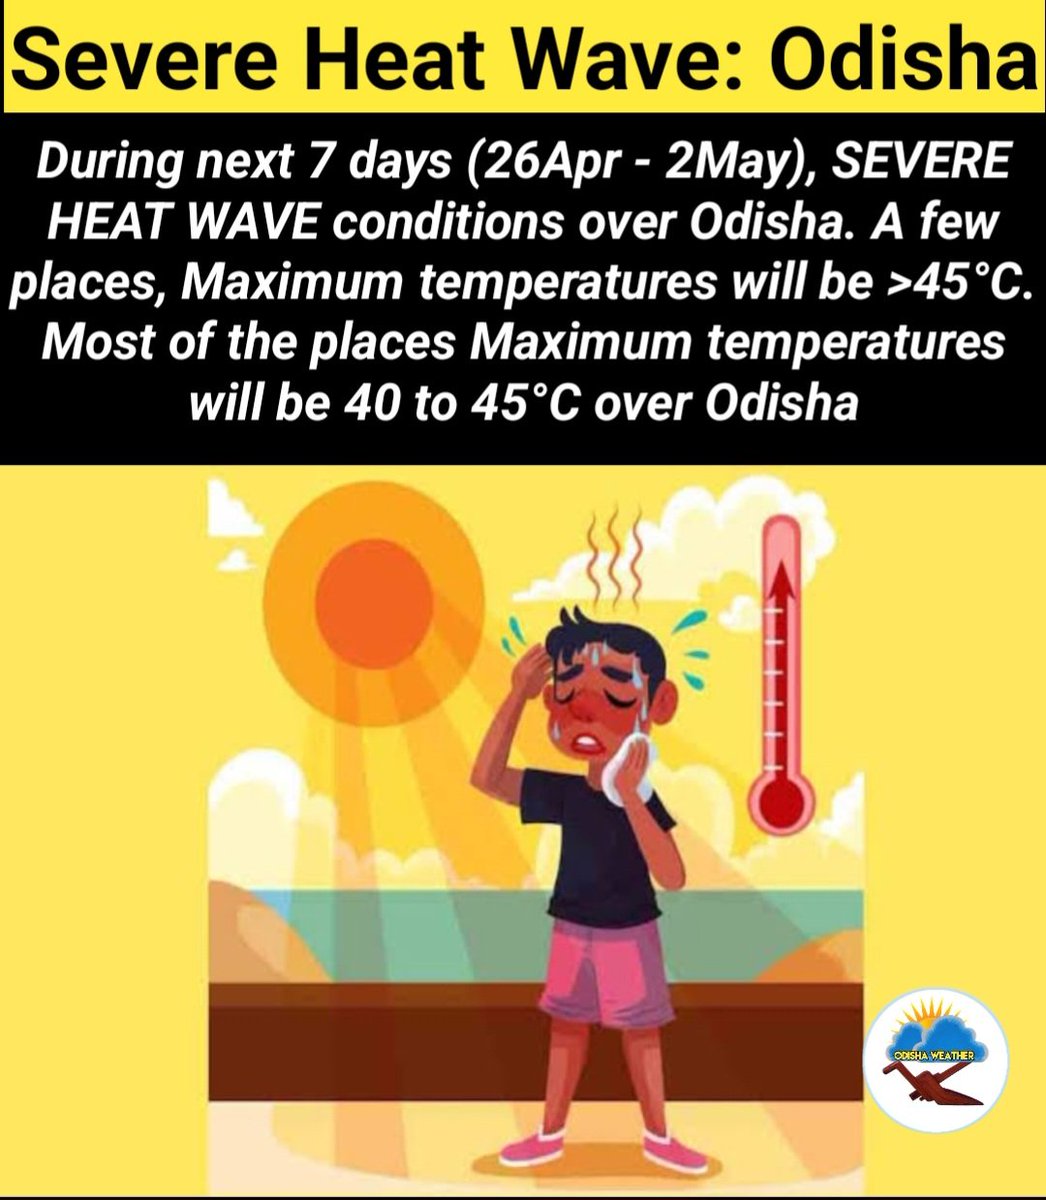 #odishaweather #weather #odisha
#cuttack #bhubaneswar #rourkela #rourkelashines #rourkelatips #temperature #nitrkl #nitrourkela #nitian #nitdiaries #sundargarh #heatwave  #thunderstorm #cmo_odisha #rayagada #trending #HeatWaveStruggles #CoolDown #health #trending @rourkelashines